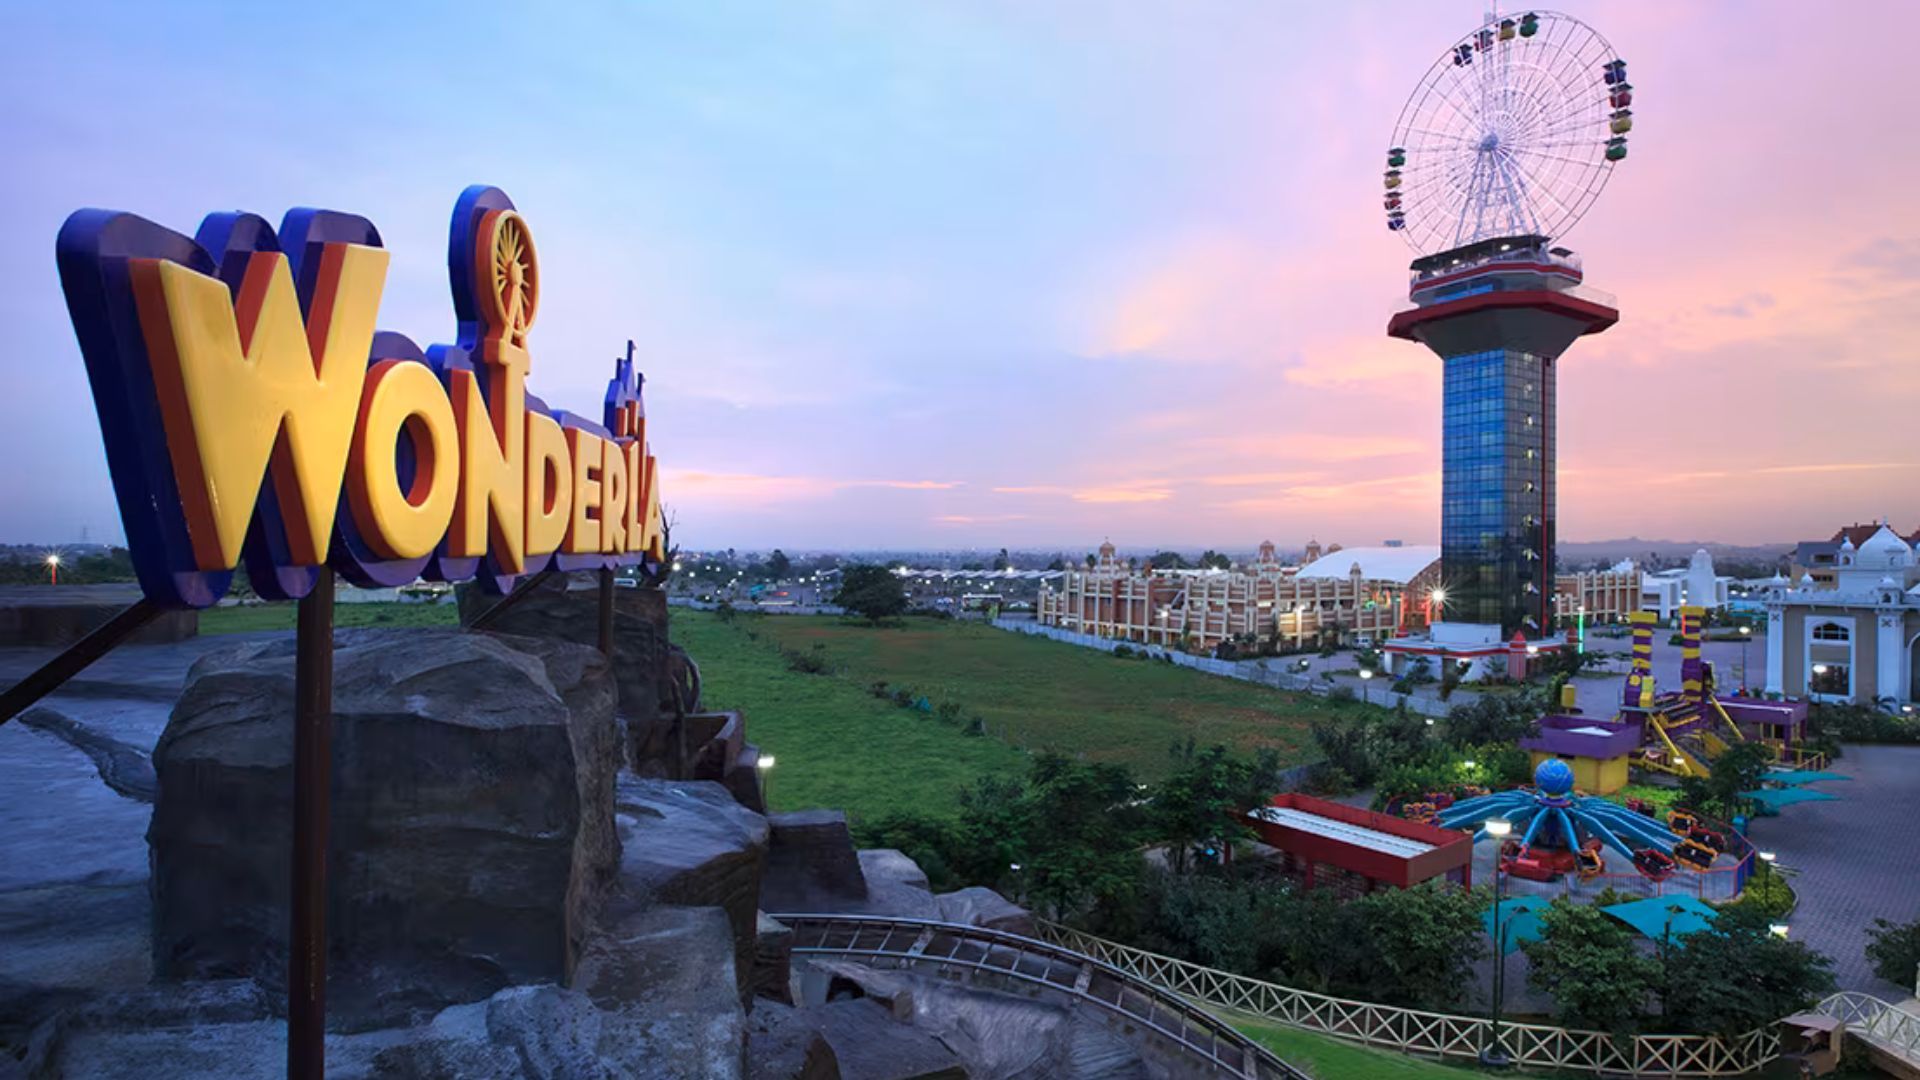 Wonderla Hyderabad Crazy Rides & Adventures Amusement Park - YouTube